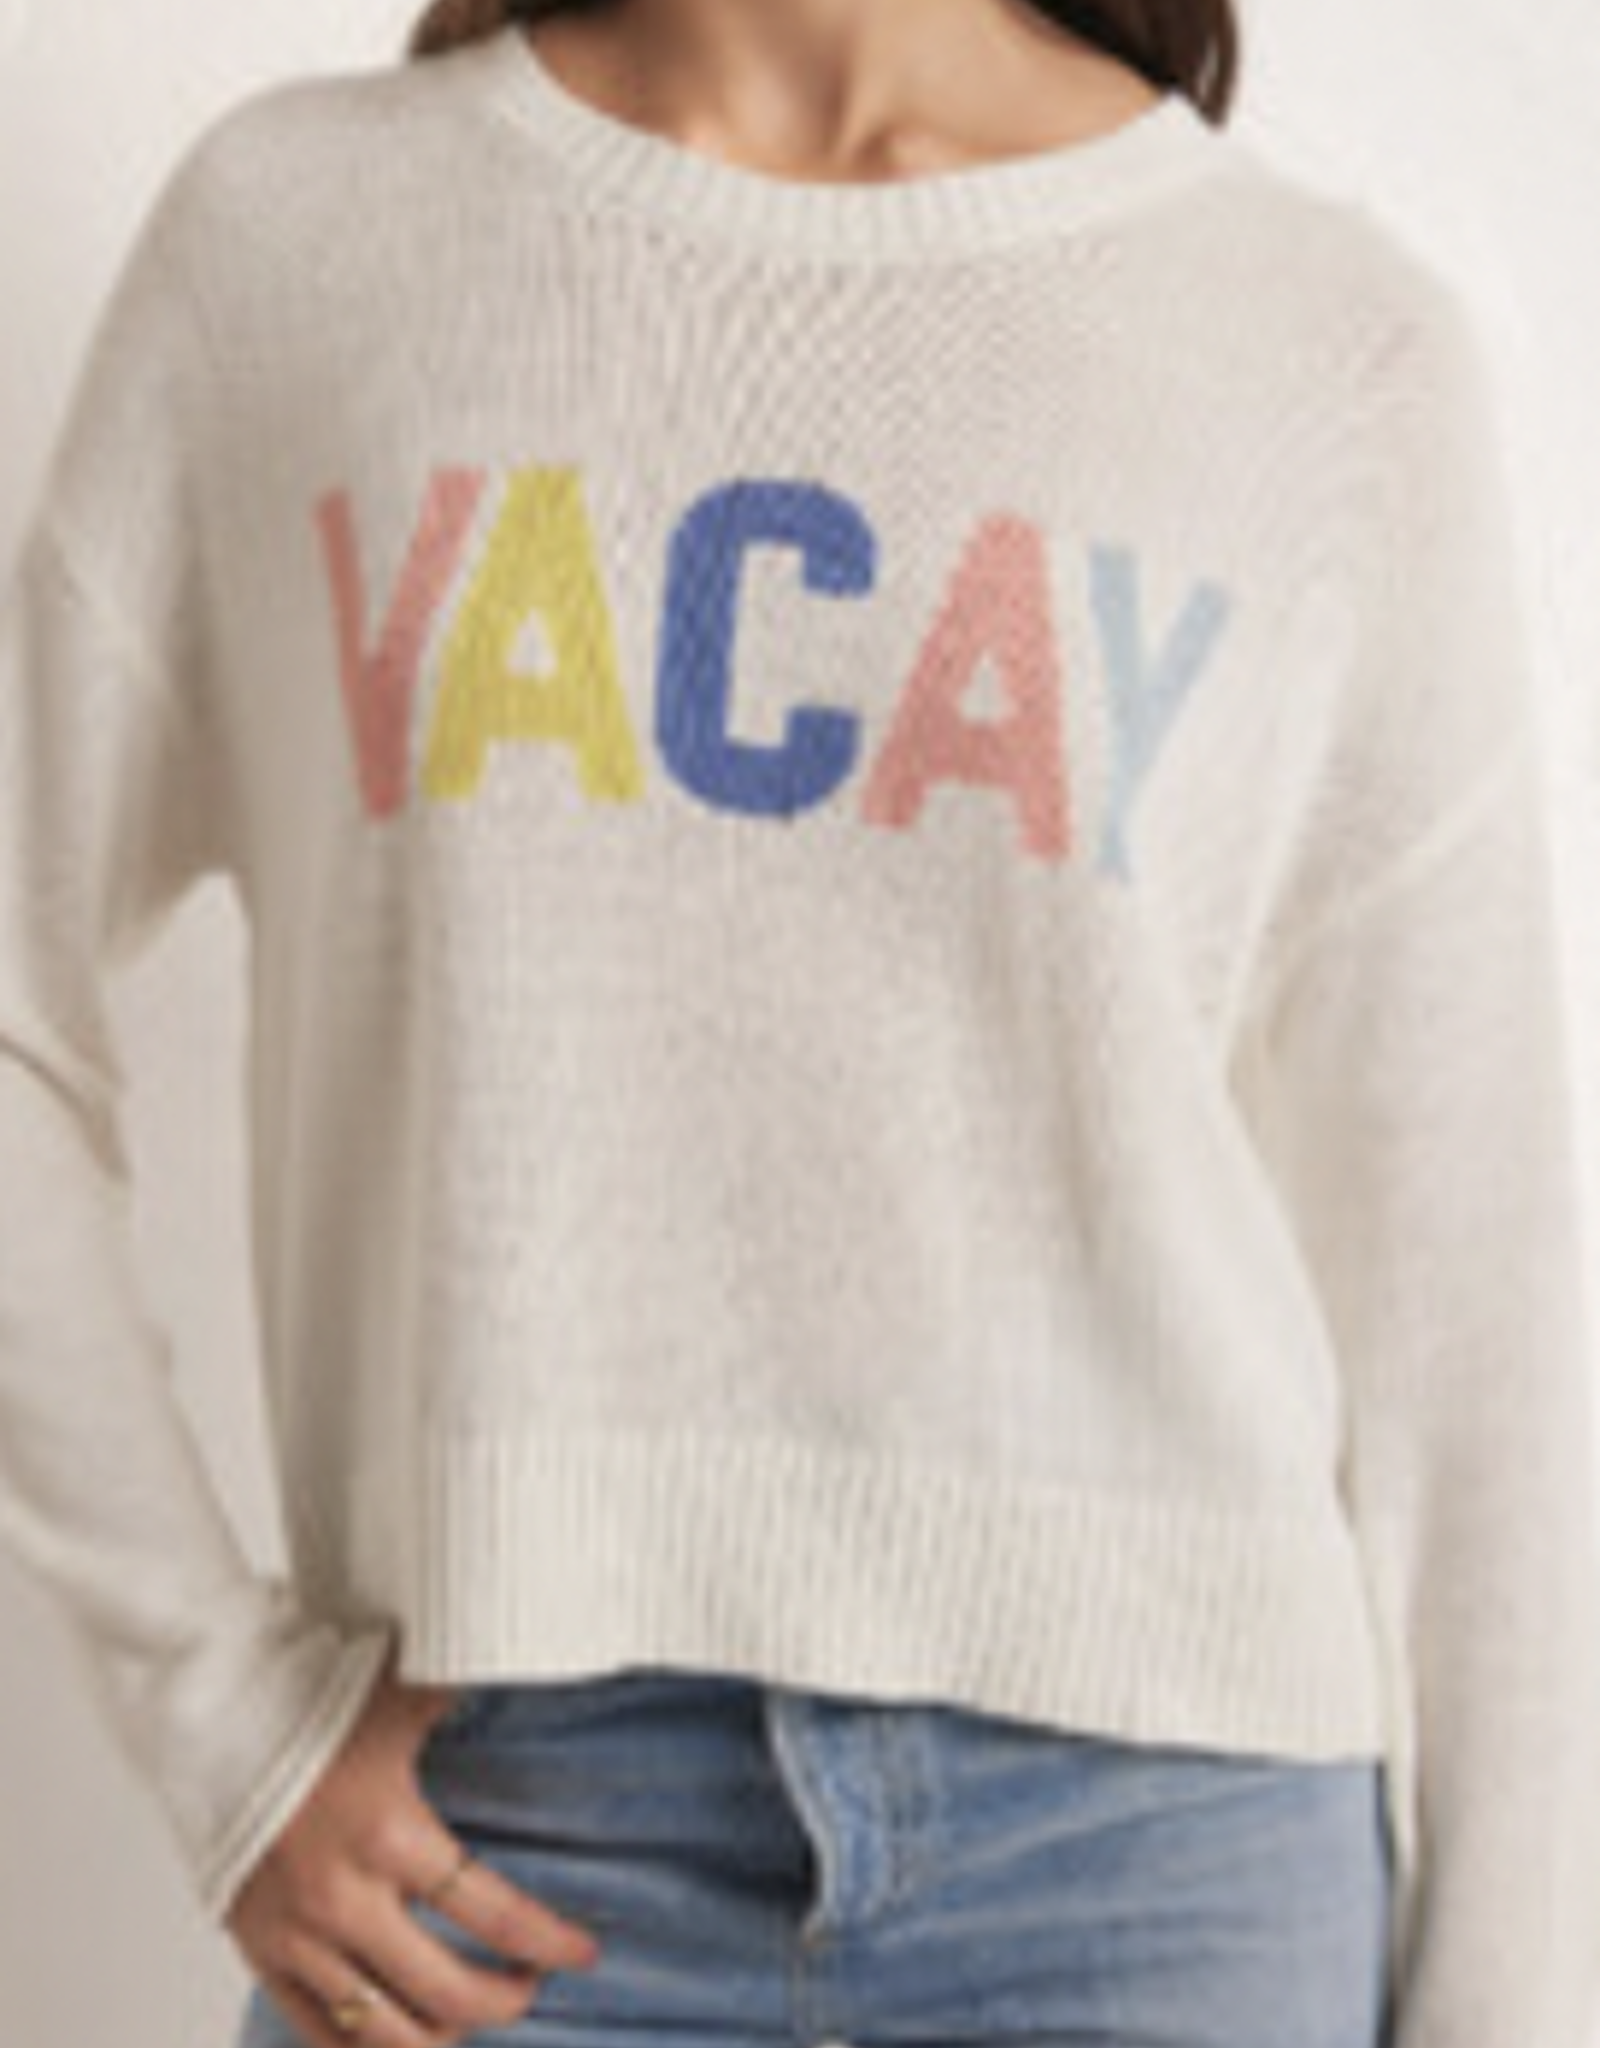 Z Supply Sienna Vacay Sweater